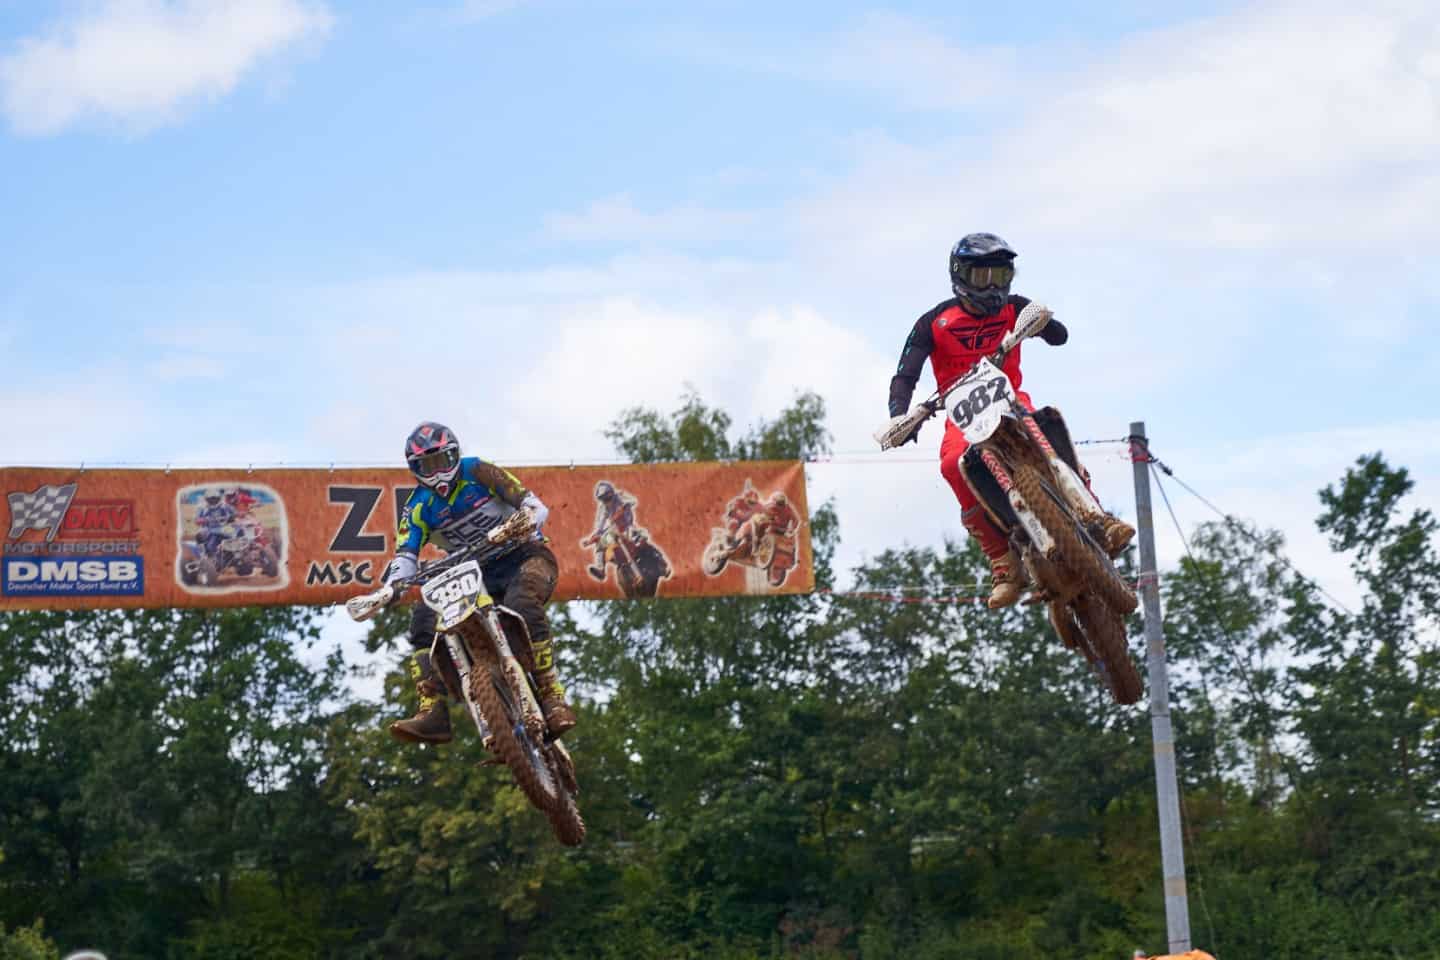 Motocross-Hessencup 2021 in Wächtersbach-Aufenau